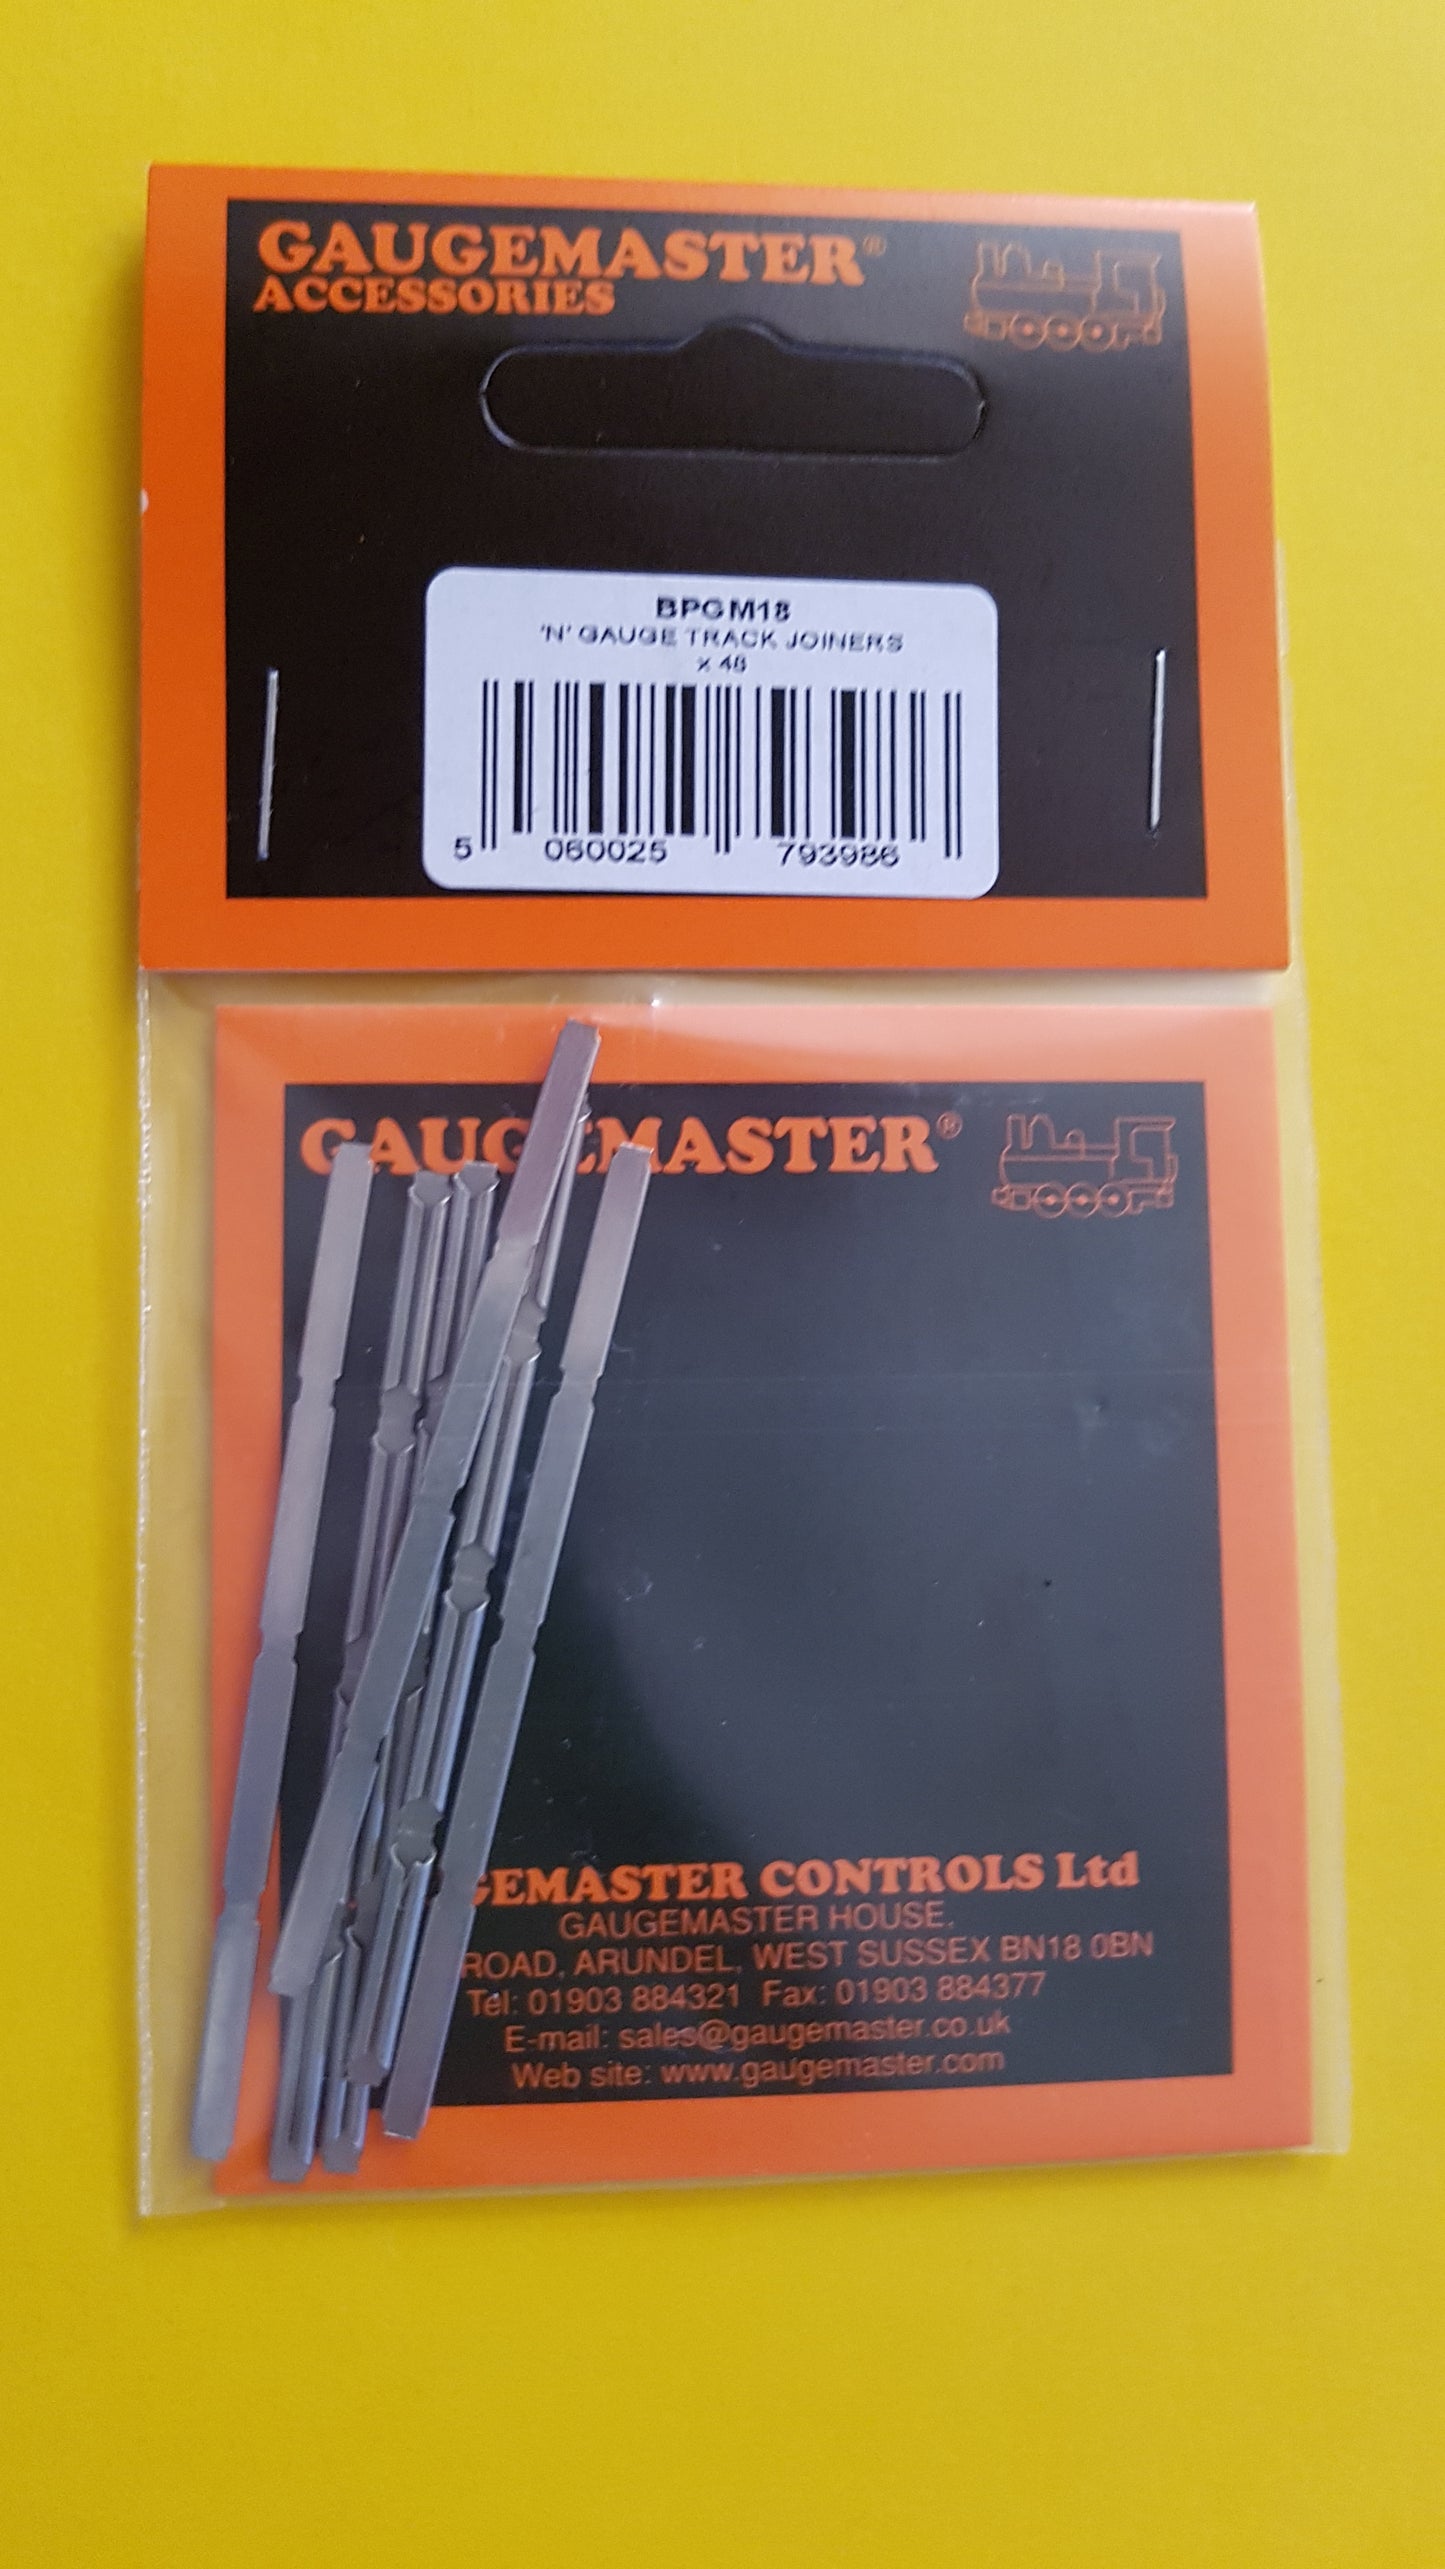 Gaugemaster BPGM18 - 48 N Gauge Rail Joiners (Fishplates)